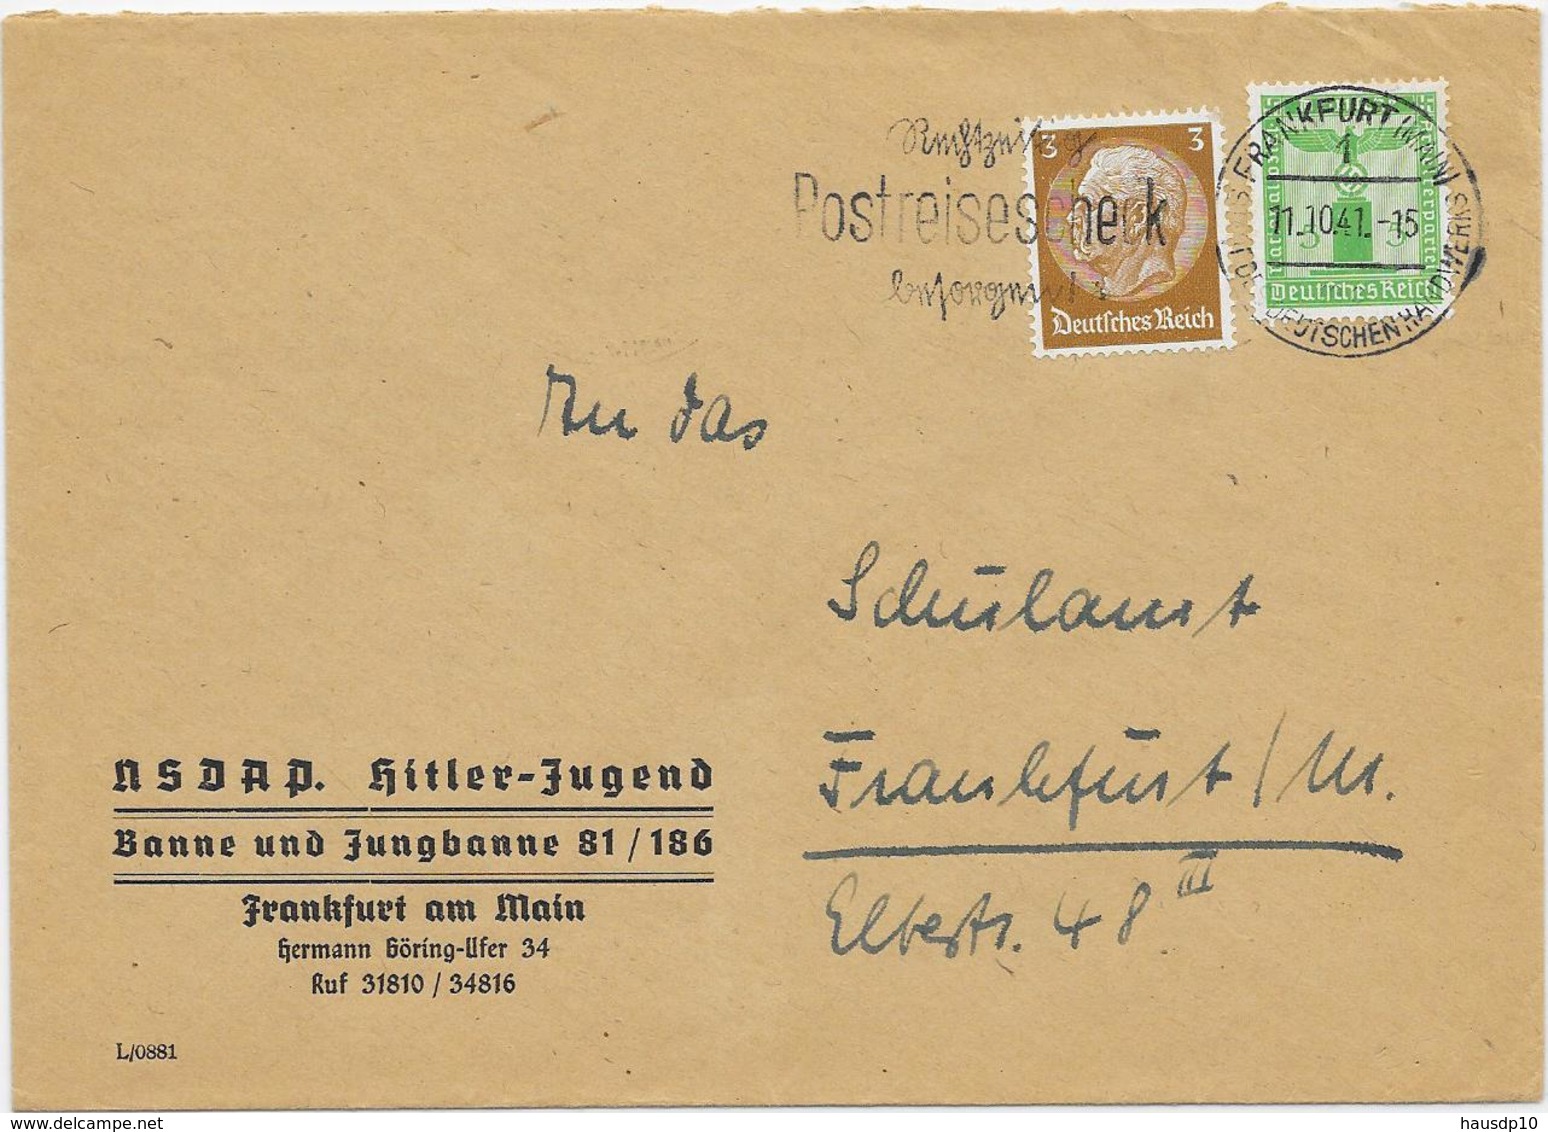 DR Dienst Brief Der NSDAP Hitler Jugend Banne Uns Jungbanne 81/186 Frankfurt A. Main 11.10.41 Mif. M. Mi.147 - Covers & Documents